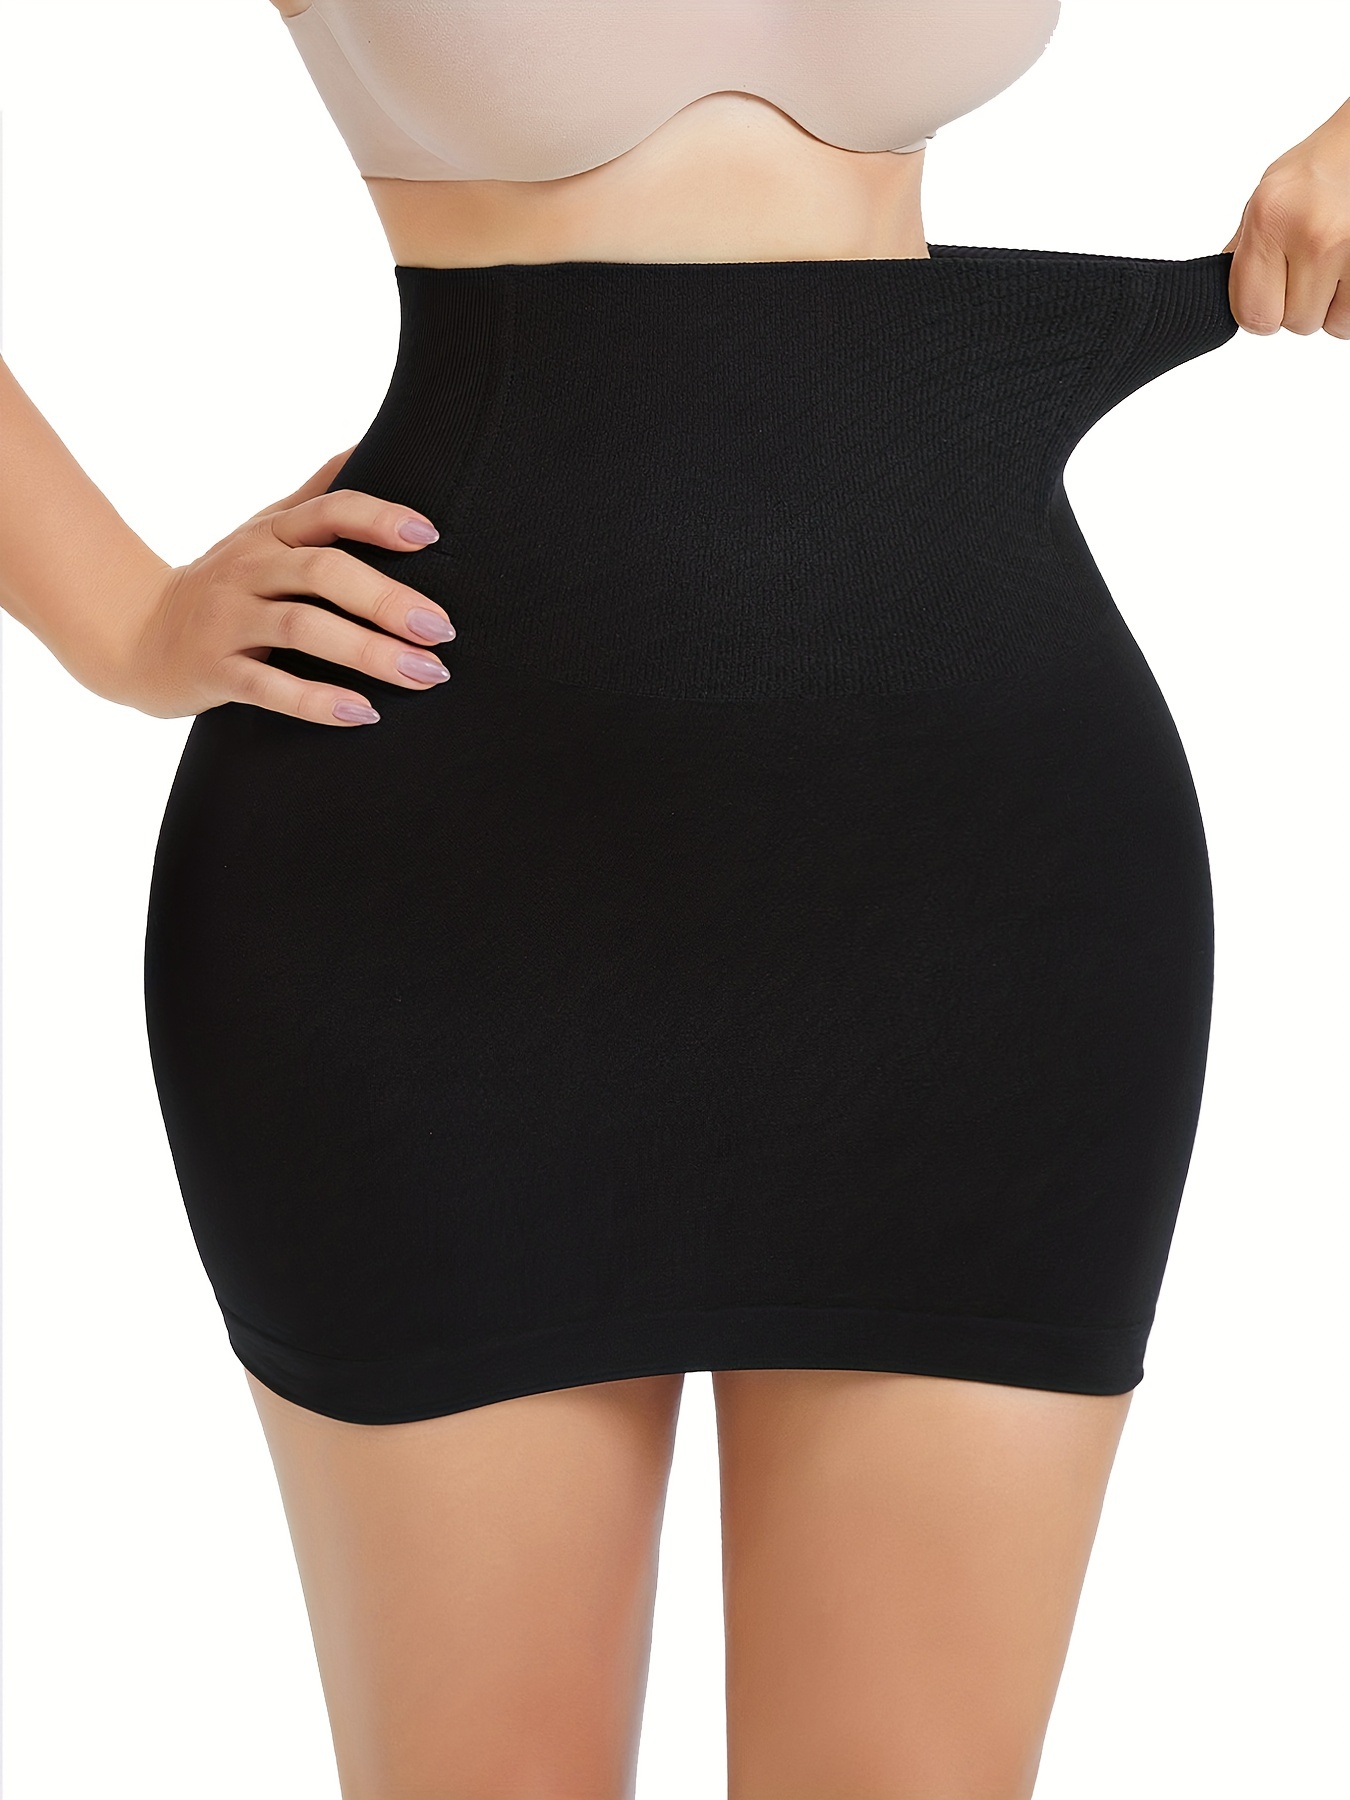 High Quality Womens Tummy Control Full Dress Skirt Underbust Best